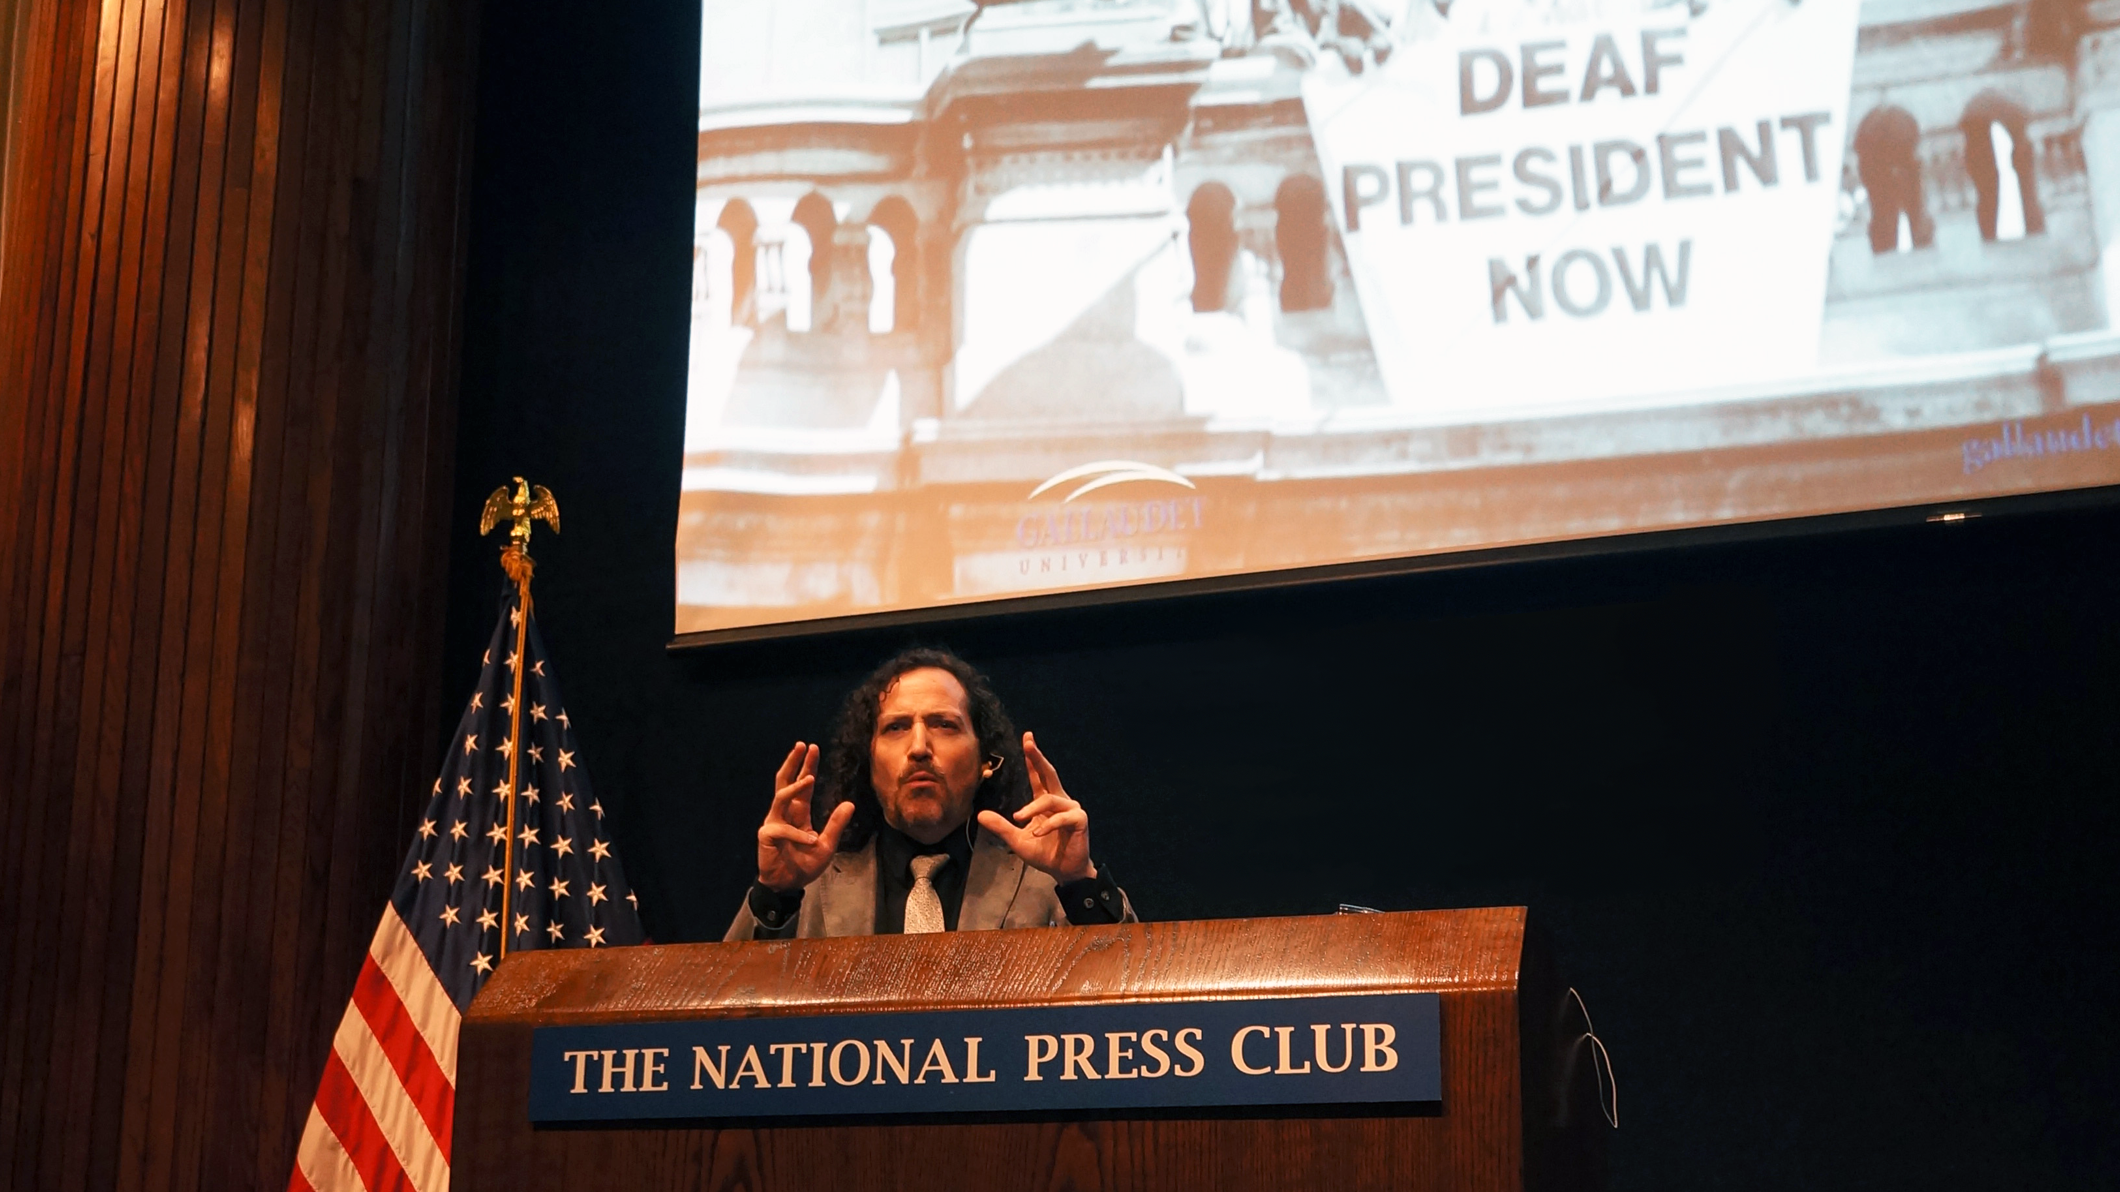 David in Washington giving talk and gesturing behind the National Press Club podium